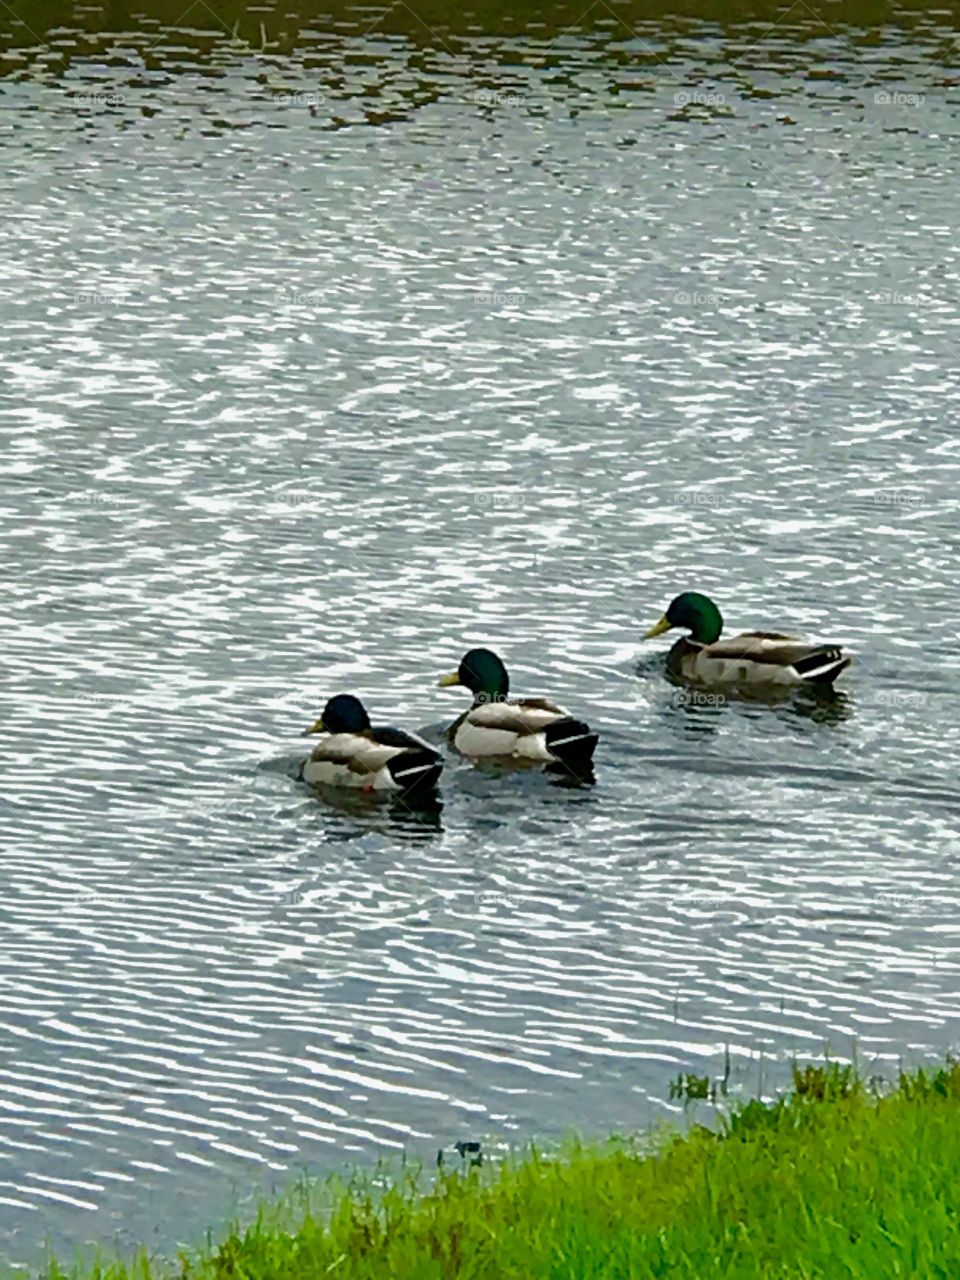 All my ducks in a row